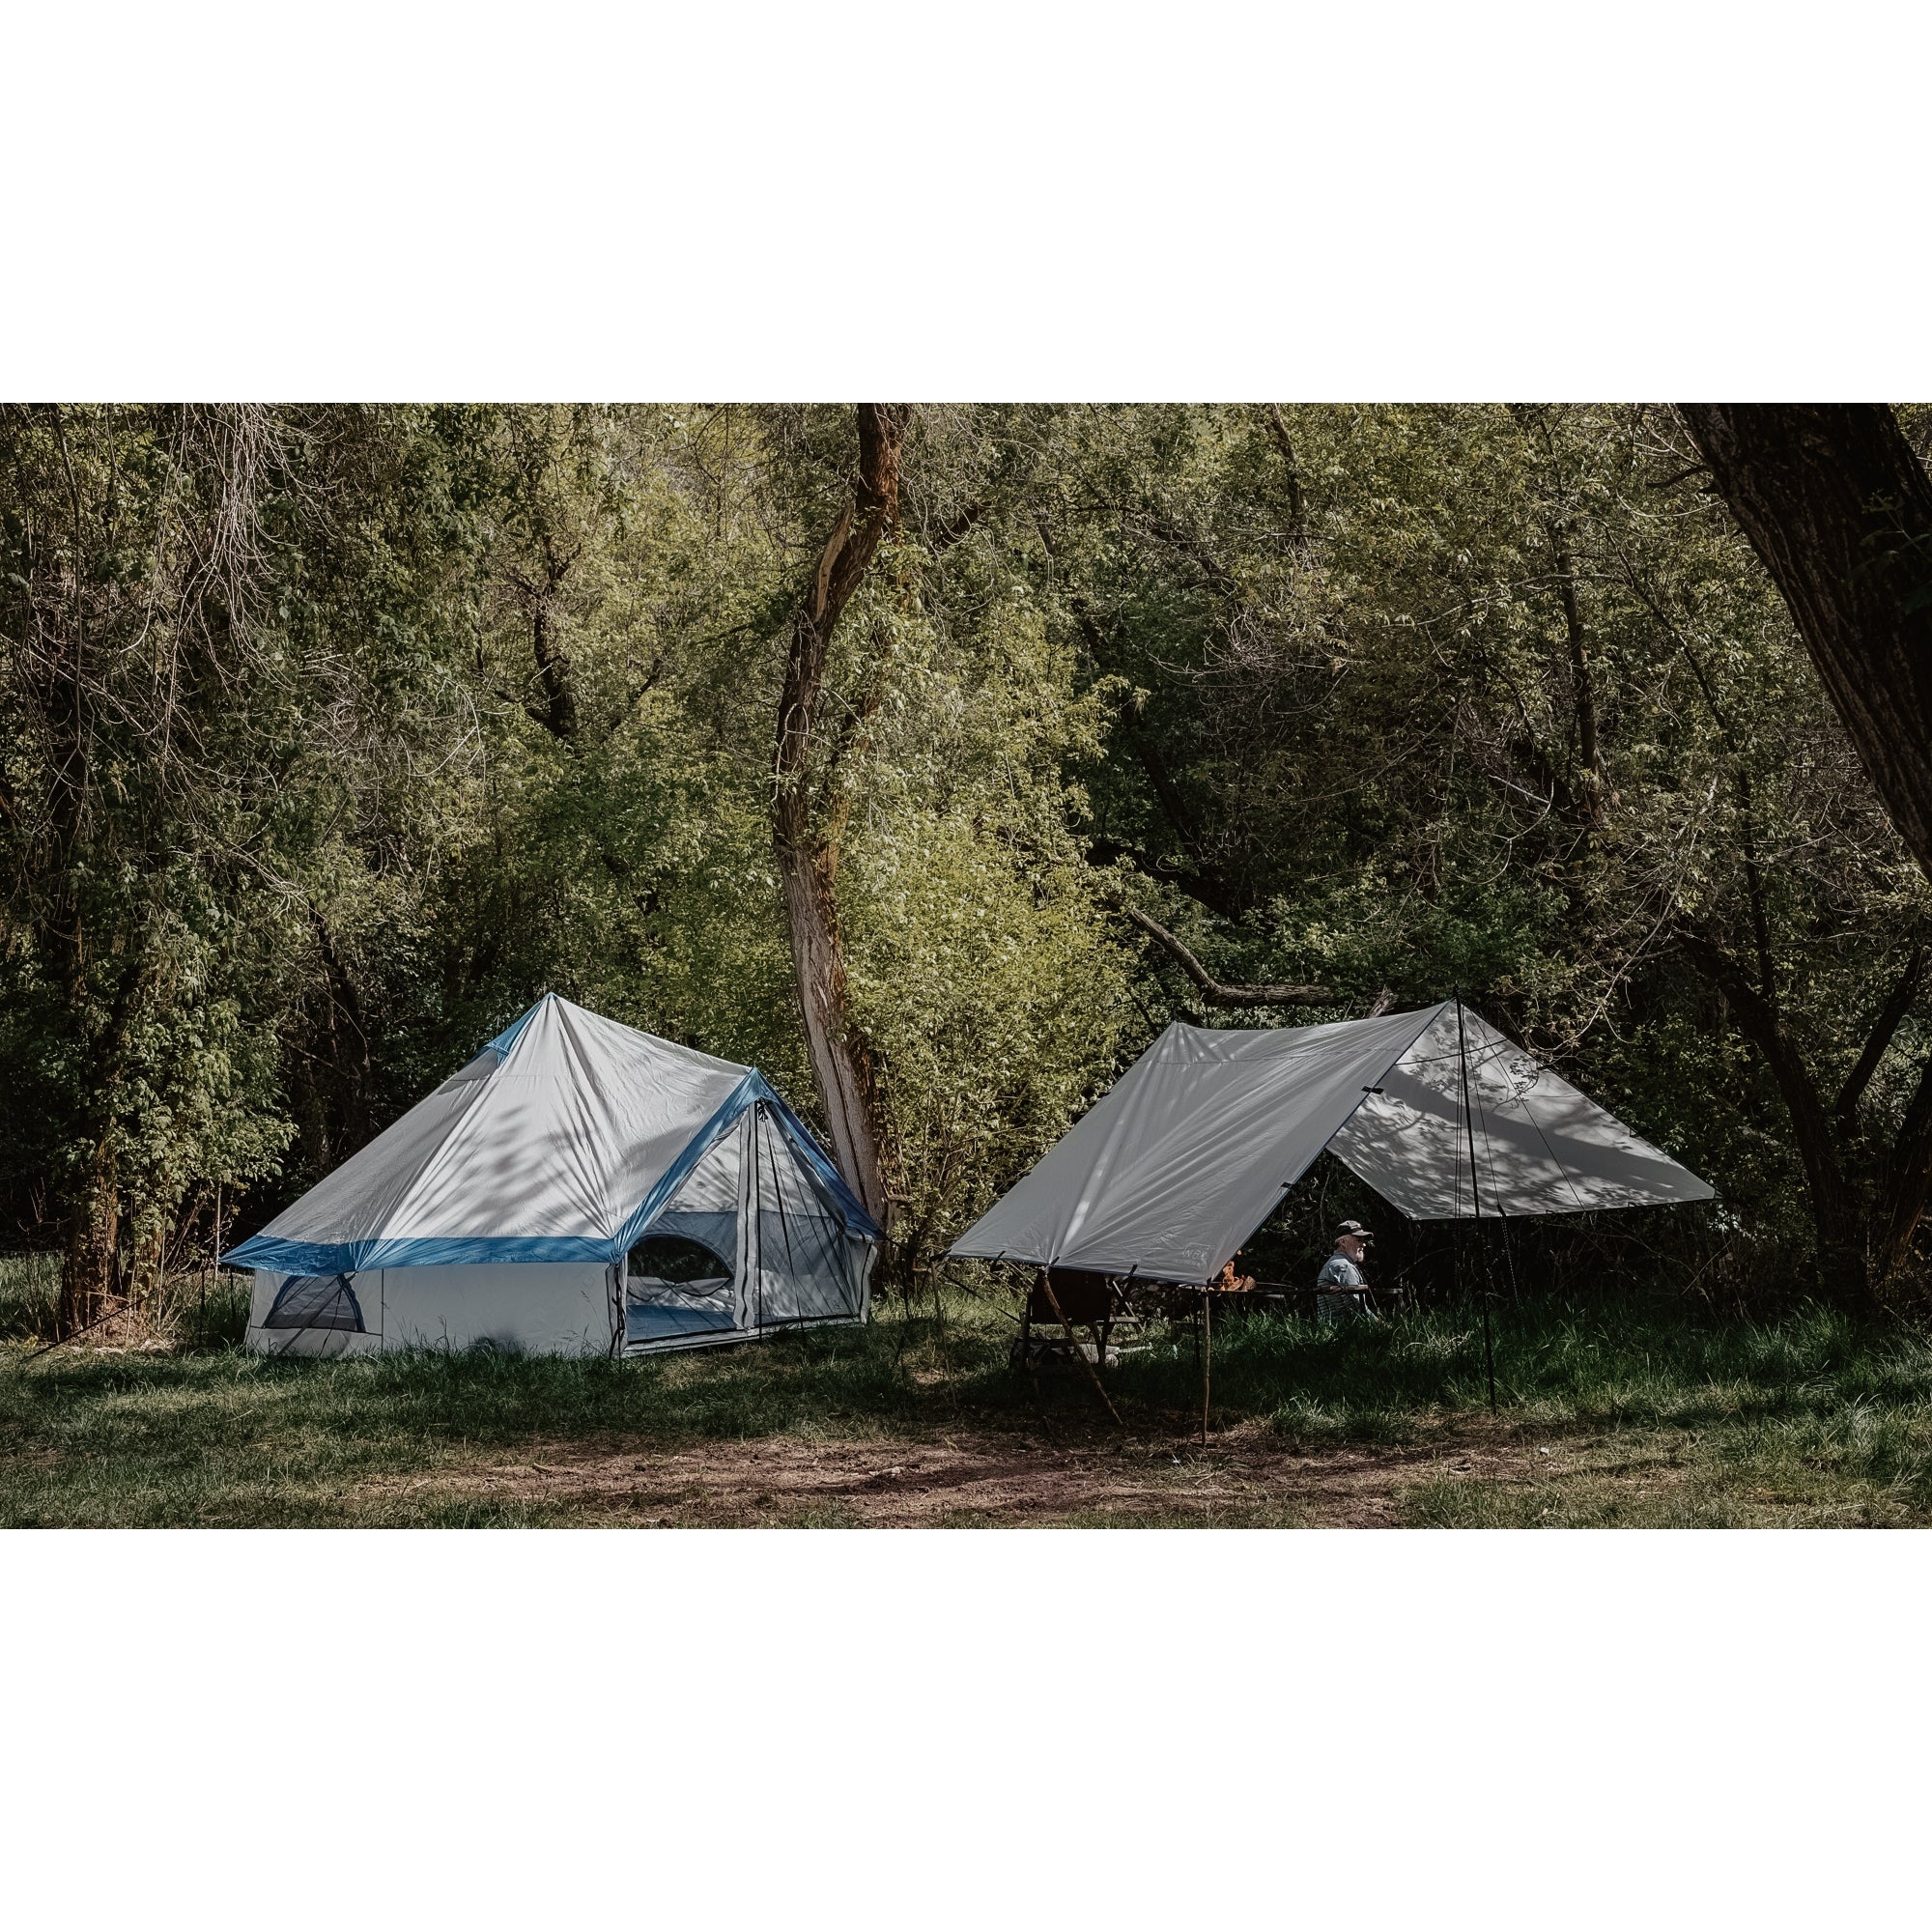 Barebones | Rain Fly Shelter - Outdoor Camping Tent Tarp Kit, Tents, Barebones, Defiance Outdoor Gear Co.